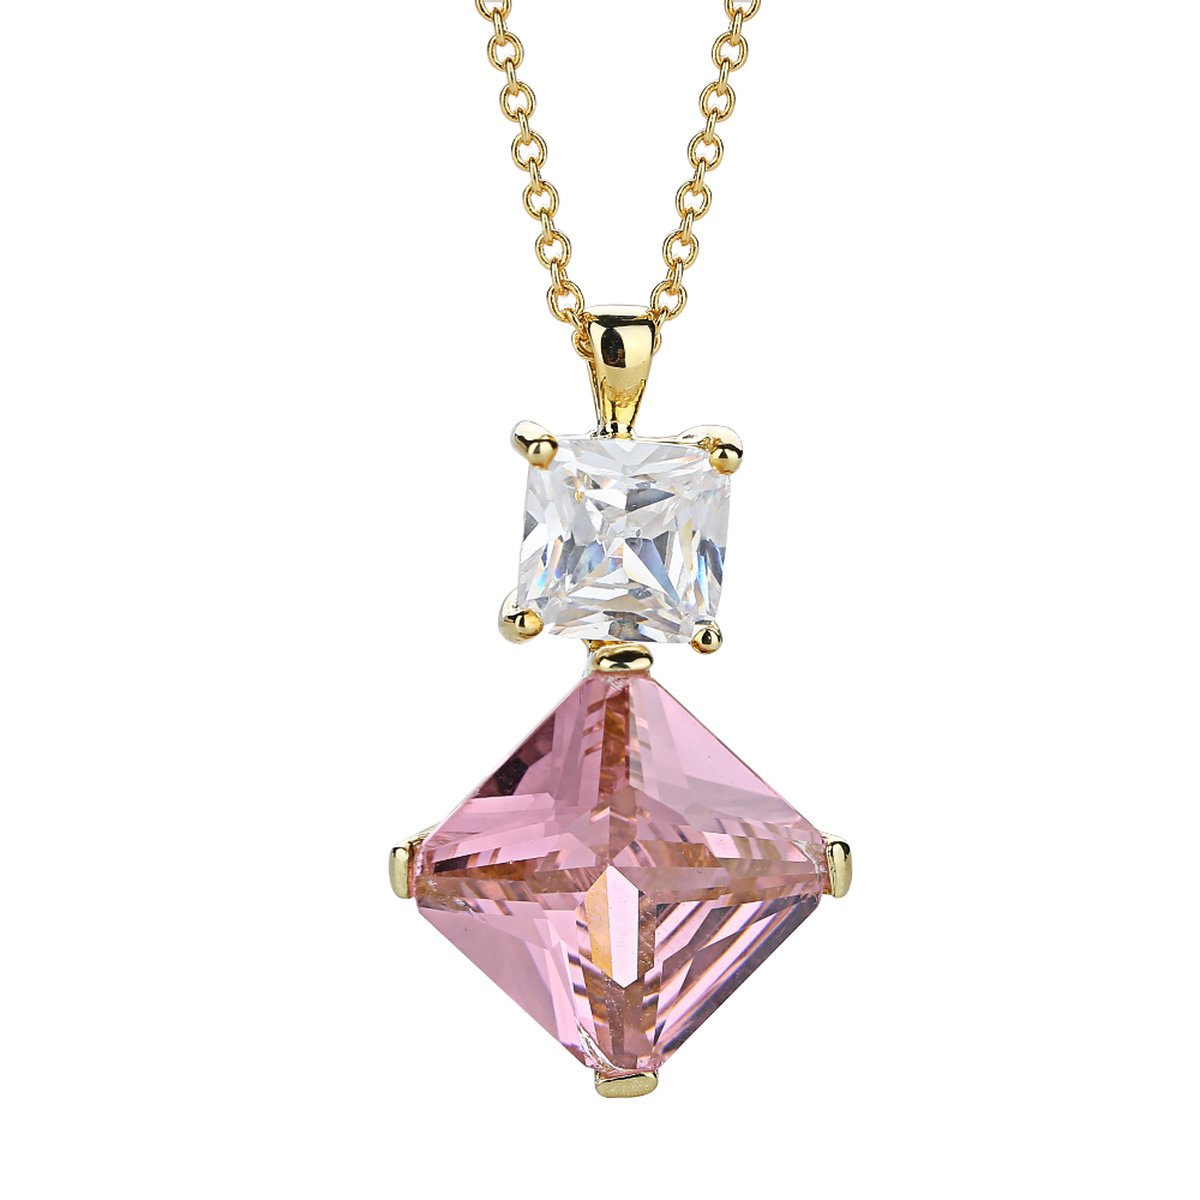 Doree dames ketting hanger - Design Sense - CU echt goud - kristal edelsteen - Valentijnsdag cadeau